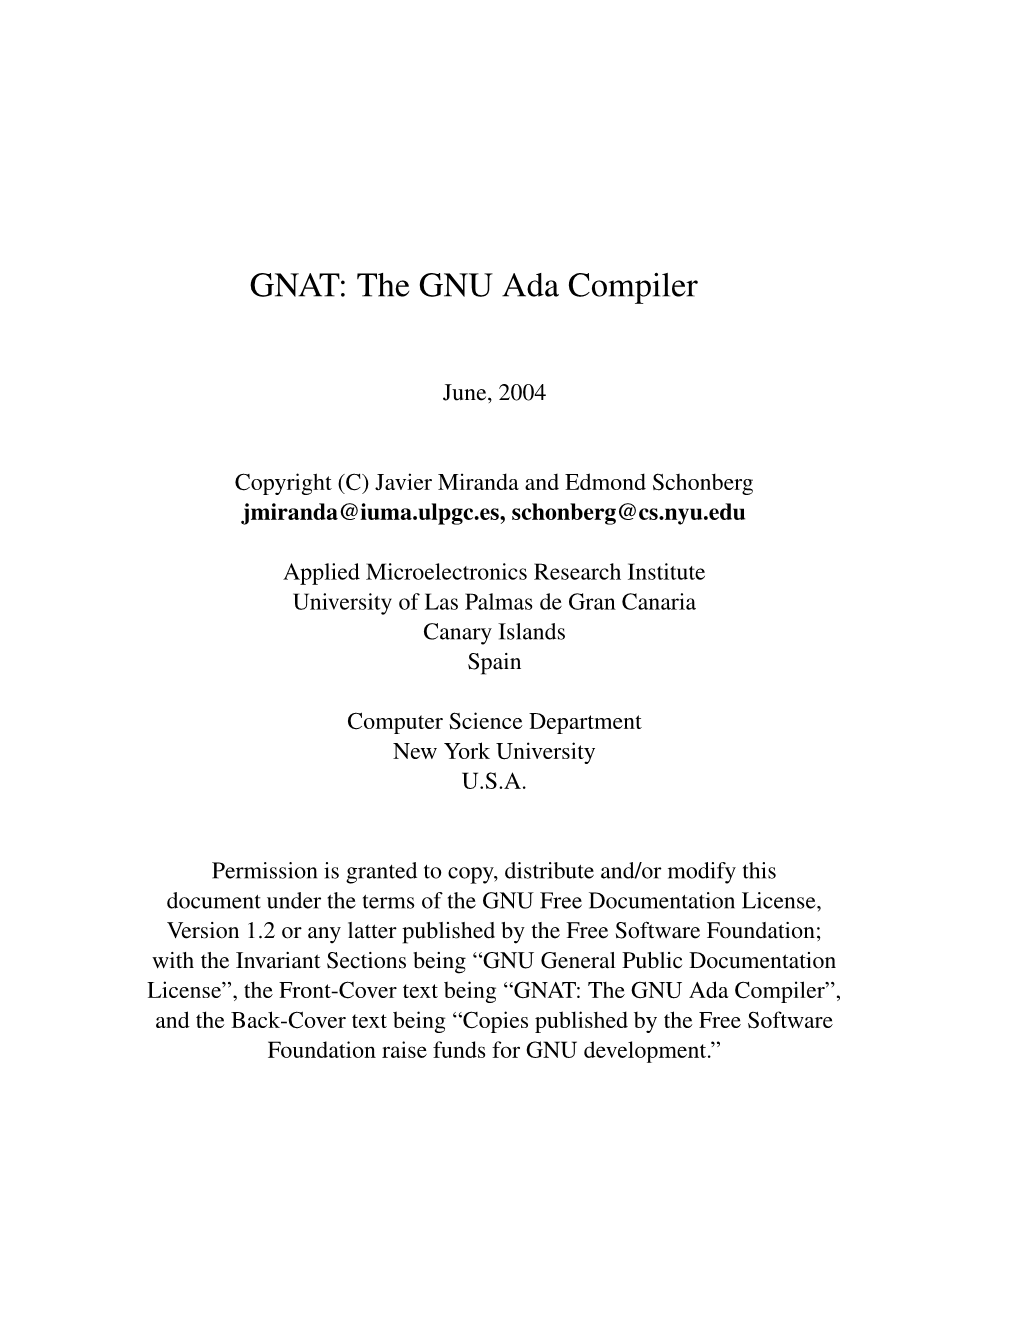 GNAT: the GNU Ada Compiler